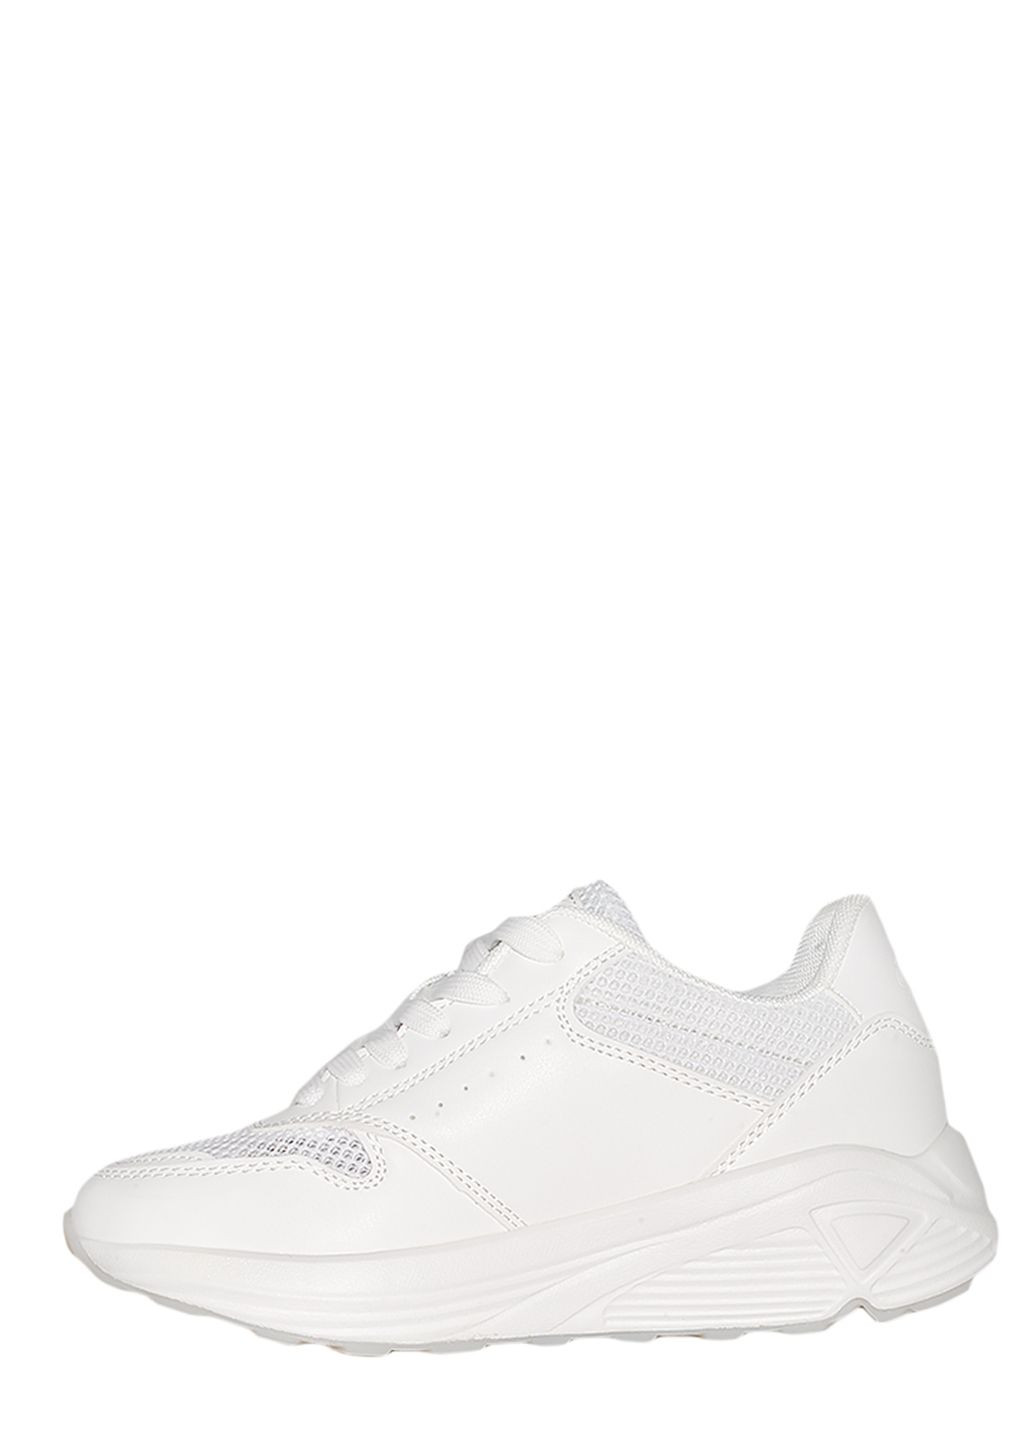 Білі осінні кросівки st6598-8 white Stilli